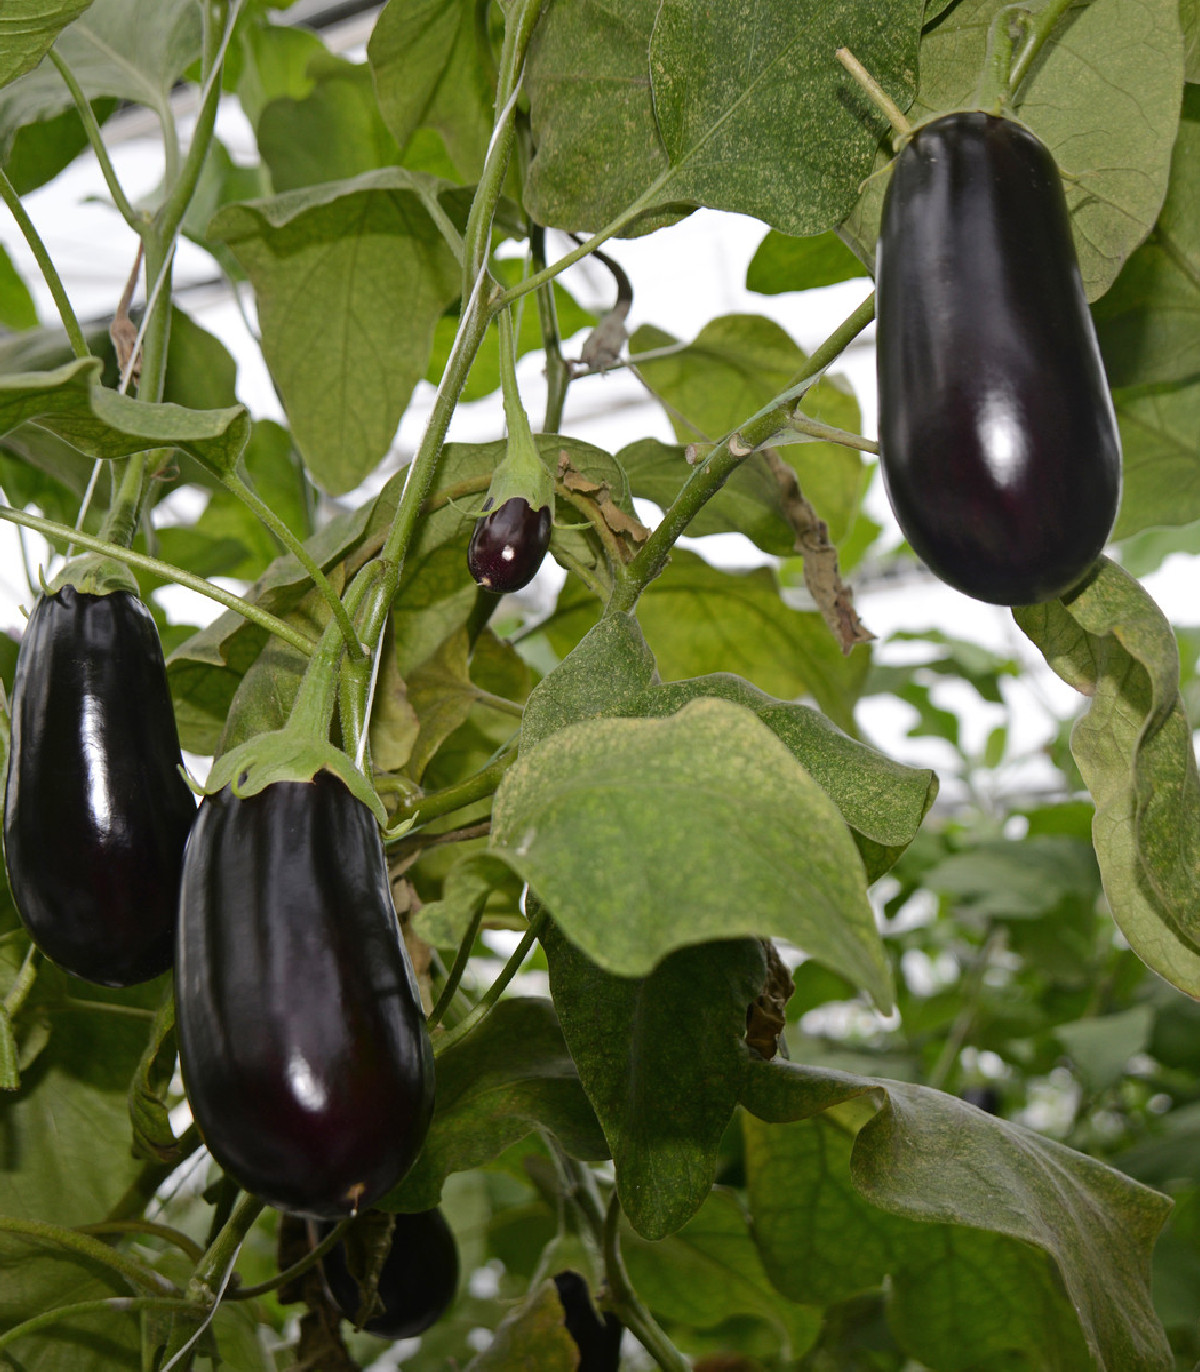 Baklažán český skorý - Solanum melongena - semená baklažánu - 100 ks